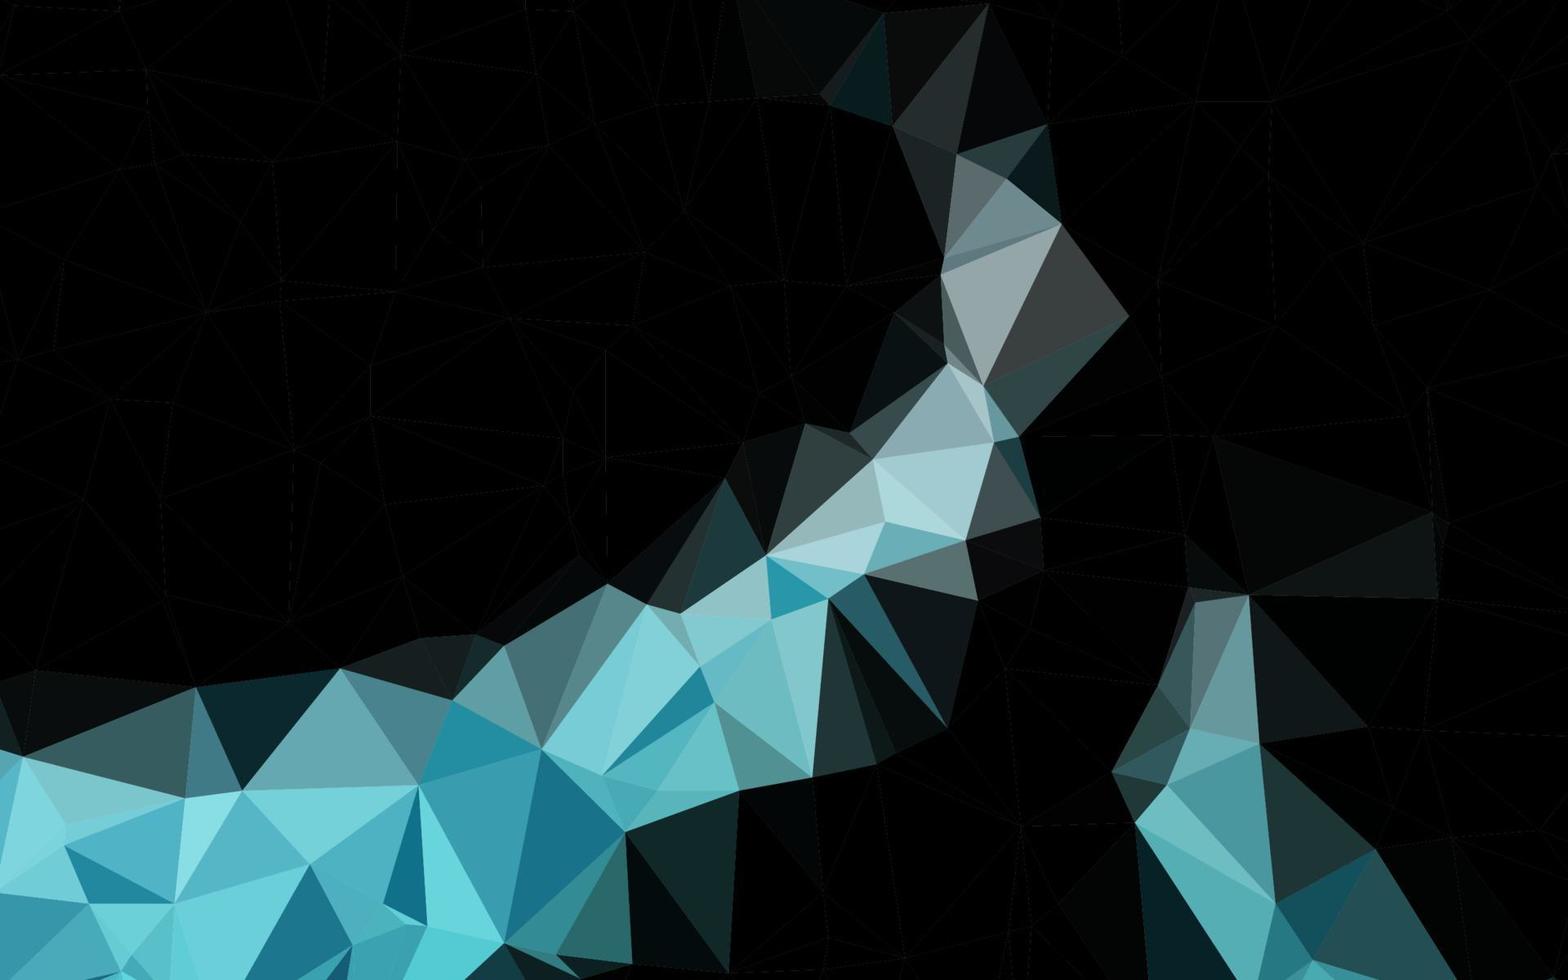 diseño abstracto de polígono de vector azul claro.